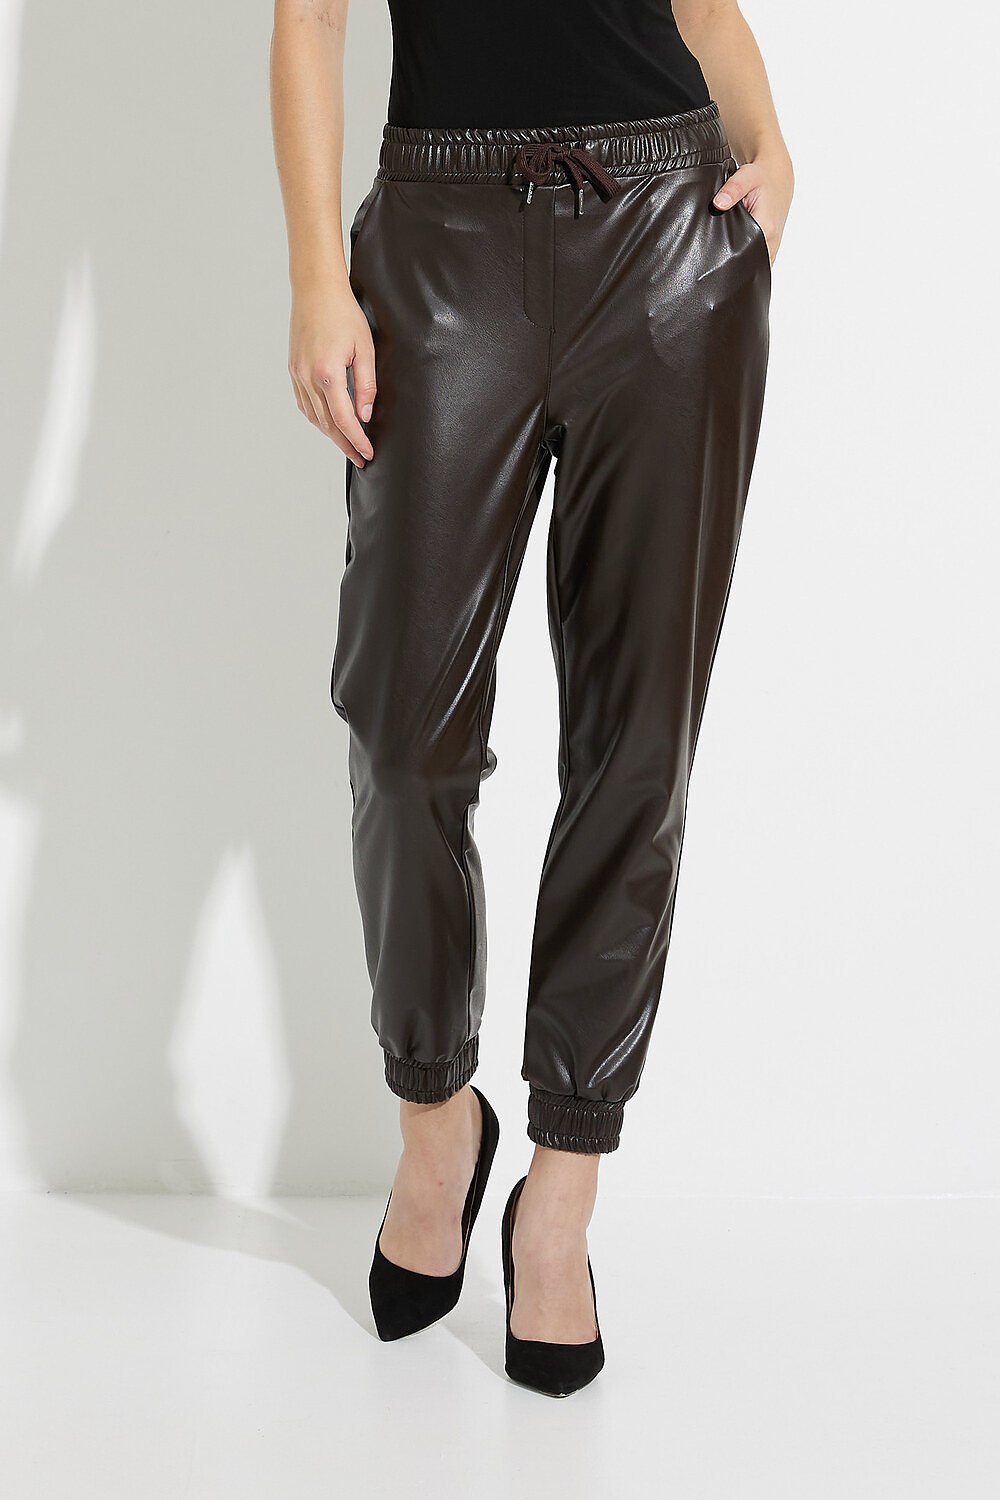 Joseph Ribkoff Pantalon sportwear en simili cuir avec cordon Modèle 223166. Mocha